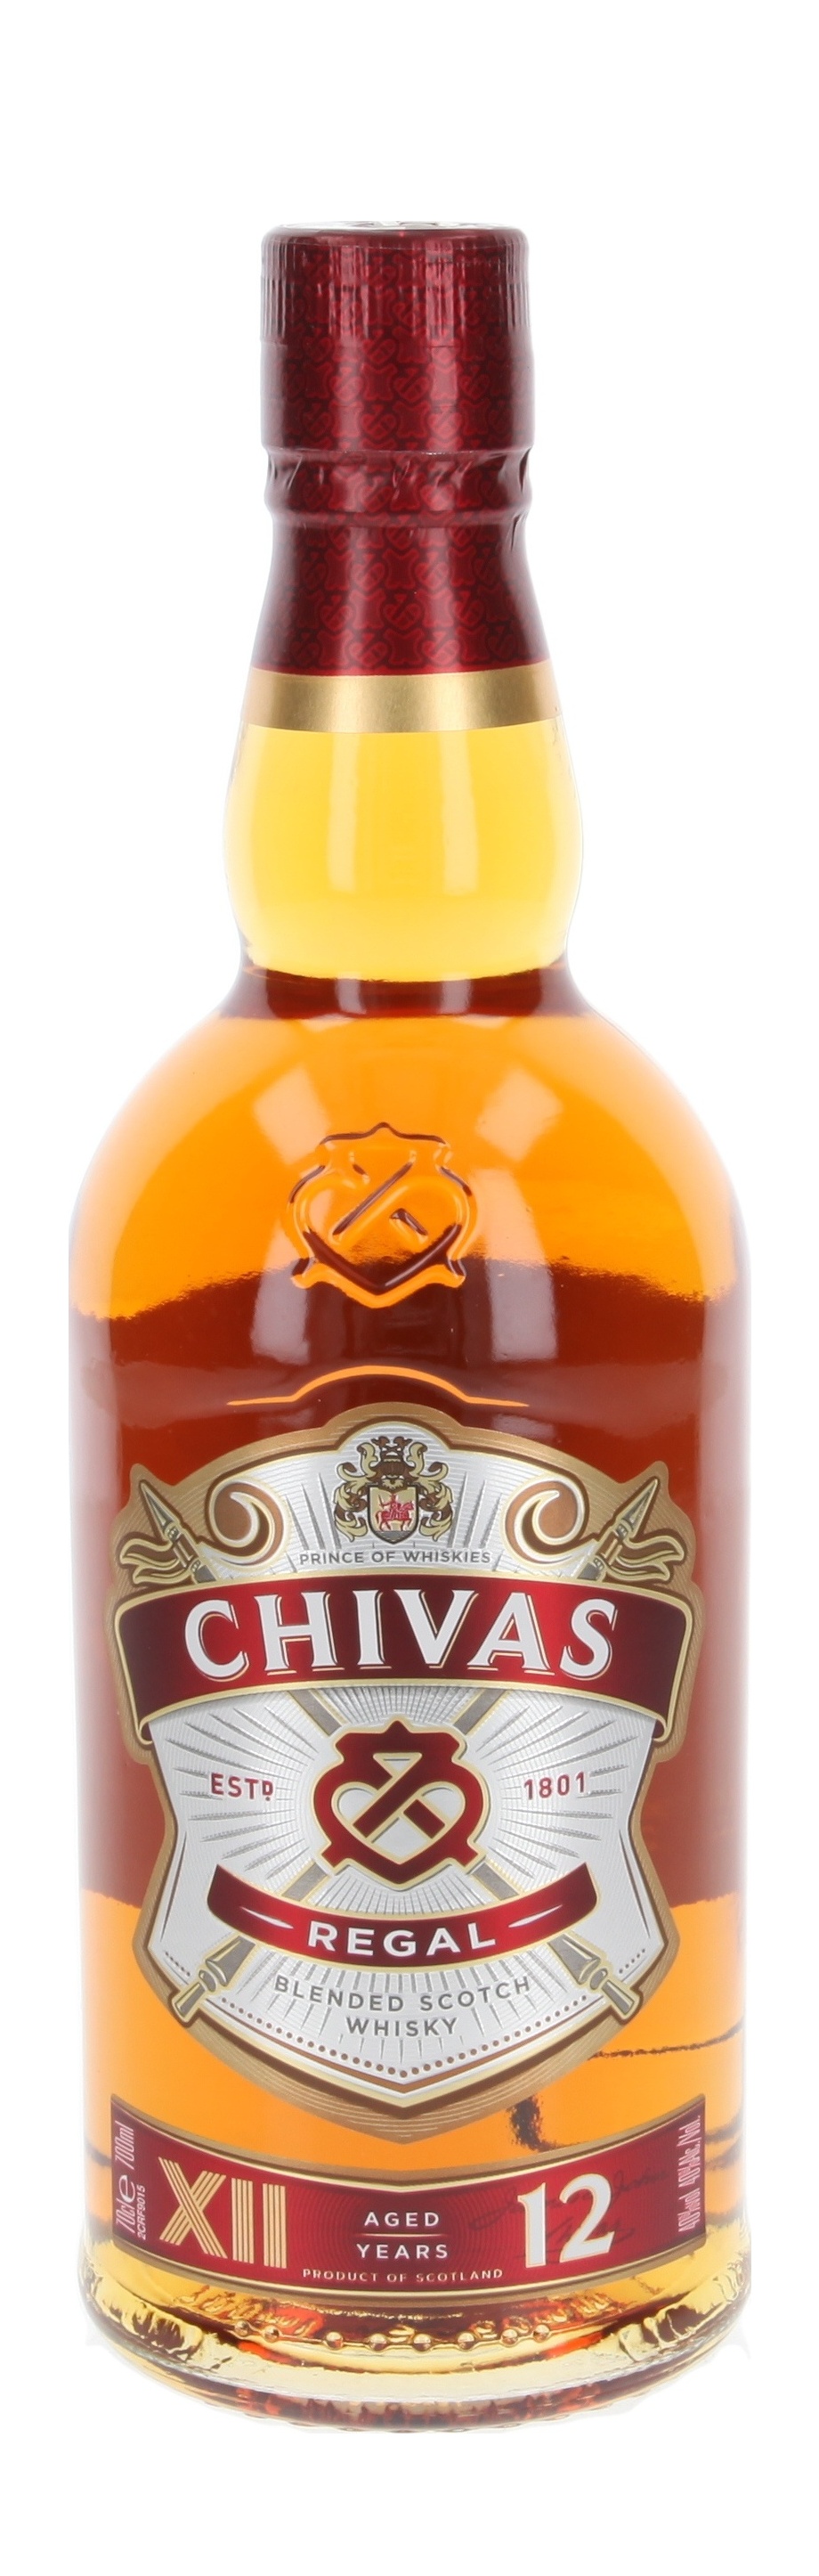 CHIVAS REGAL 12 AGED YEARS Scotch Whisky - 酒